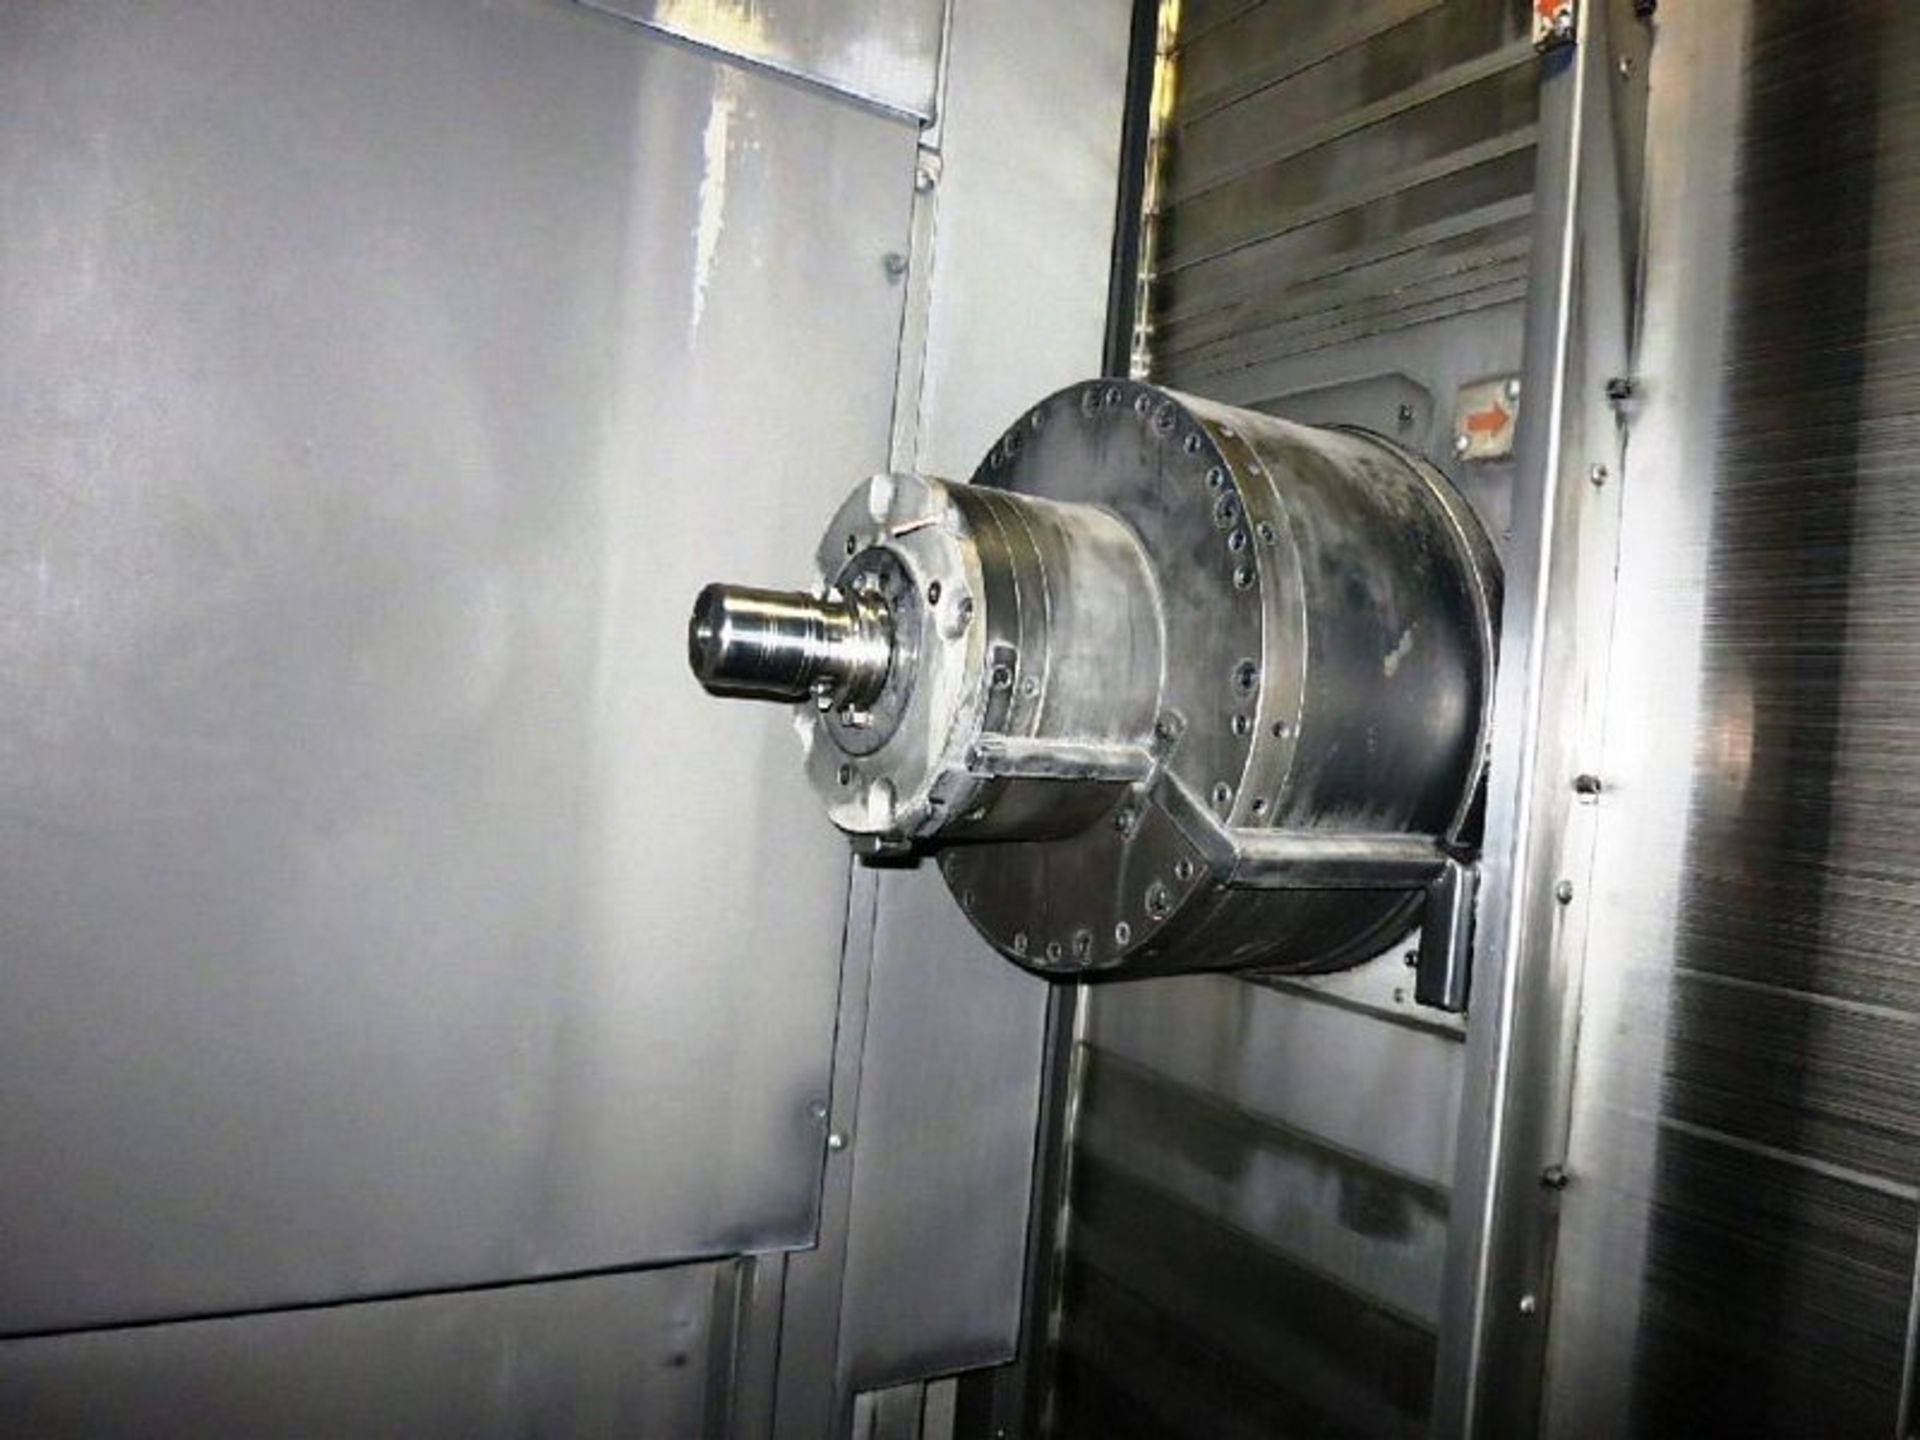 MORI SEIKI MODEL NH5000 CNC PRECISION HIGH SPEED HORIZONTAL MACHINING CENTER, S/N 00815, NEW 2005 - Image 10 of 11